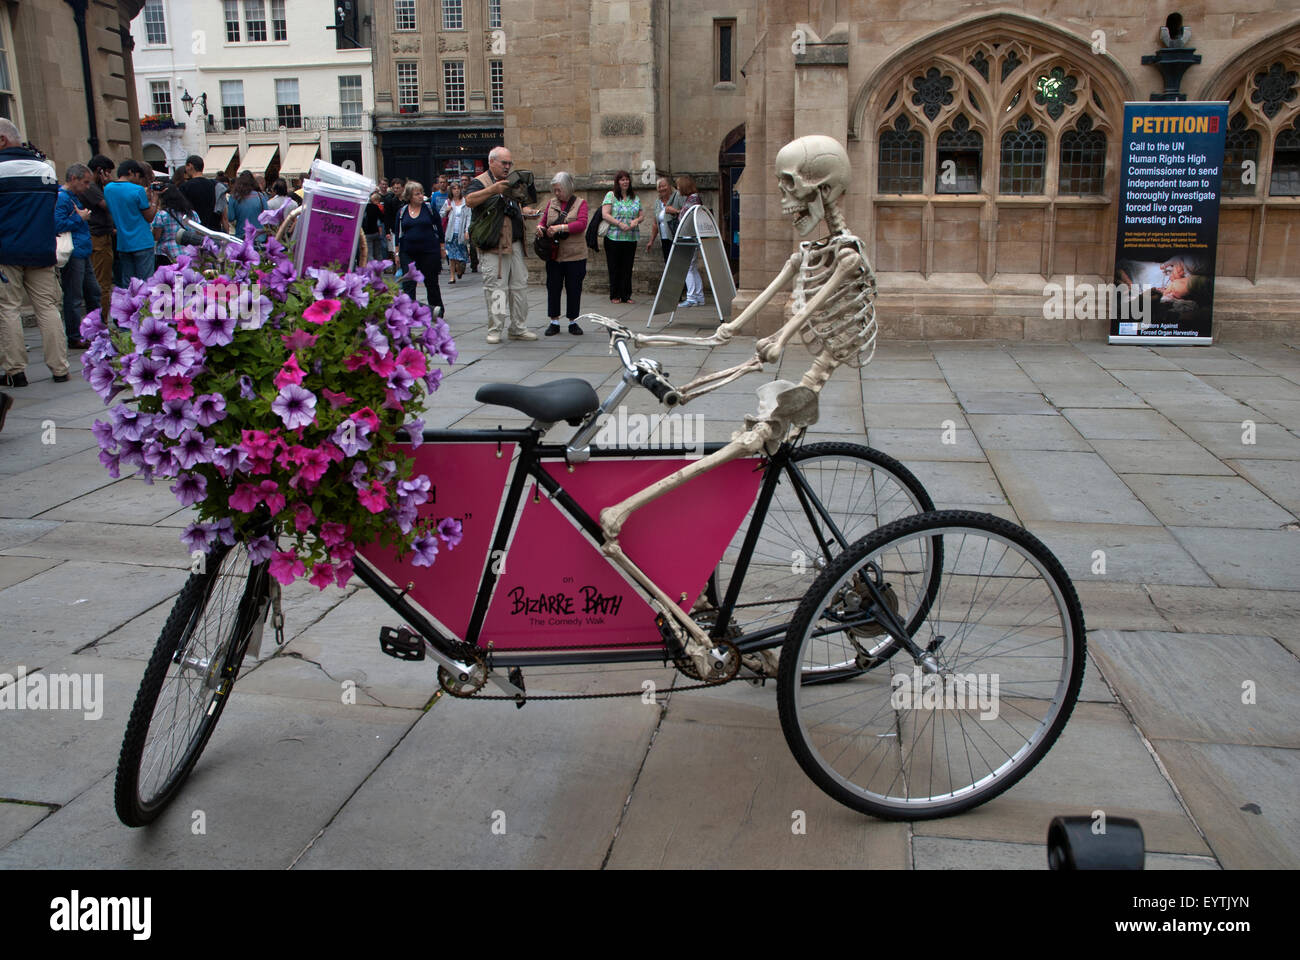 Skeleton on a bicycle advertising Bizarre Bath walking tours, Abbey Churchyard Bath Spa, Somerset England UK Stock Photo